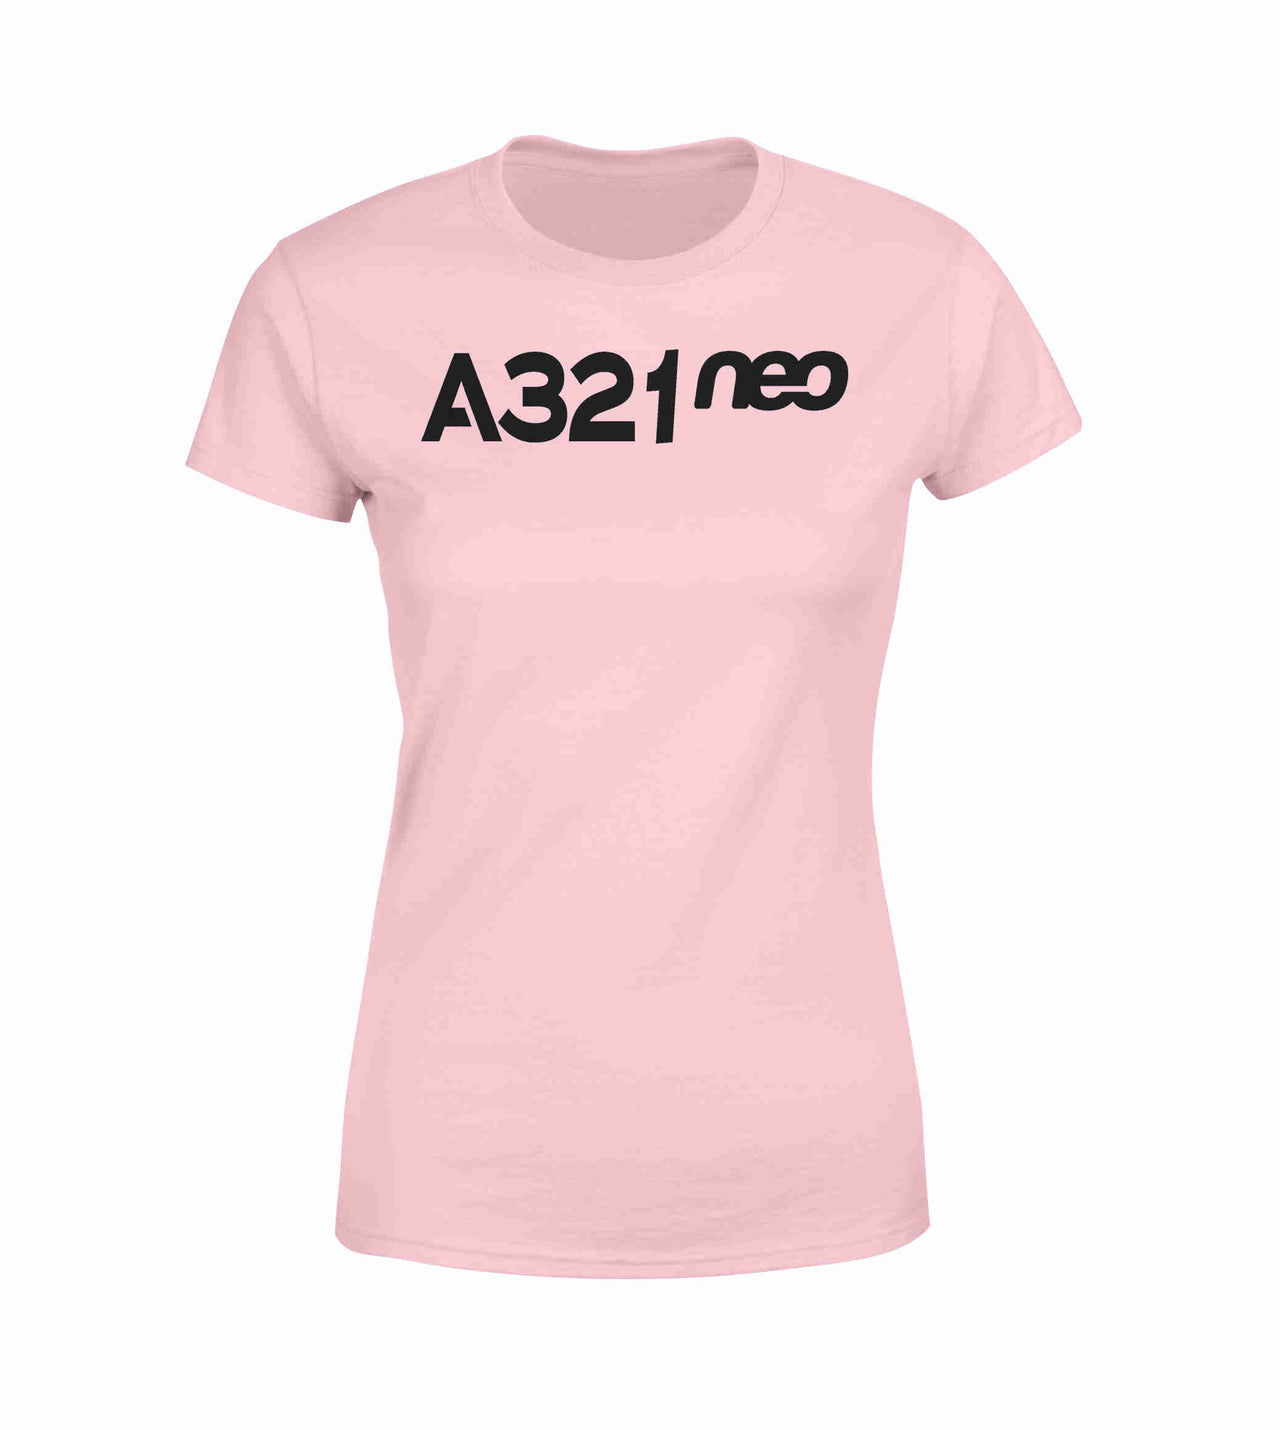 A321neo & Text Designed Women T-Shirts